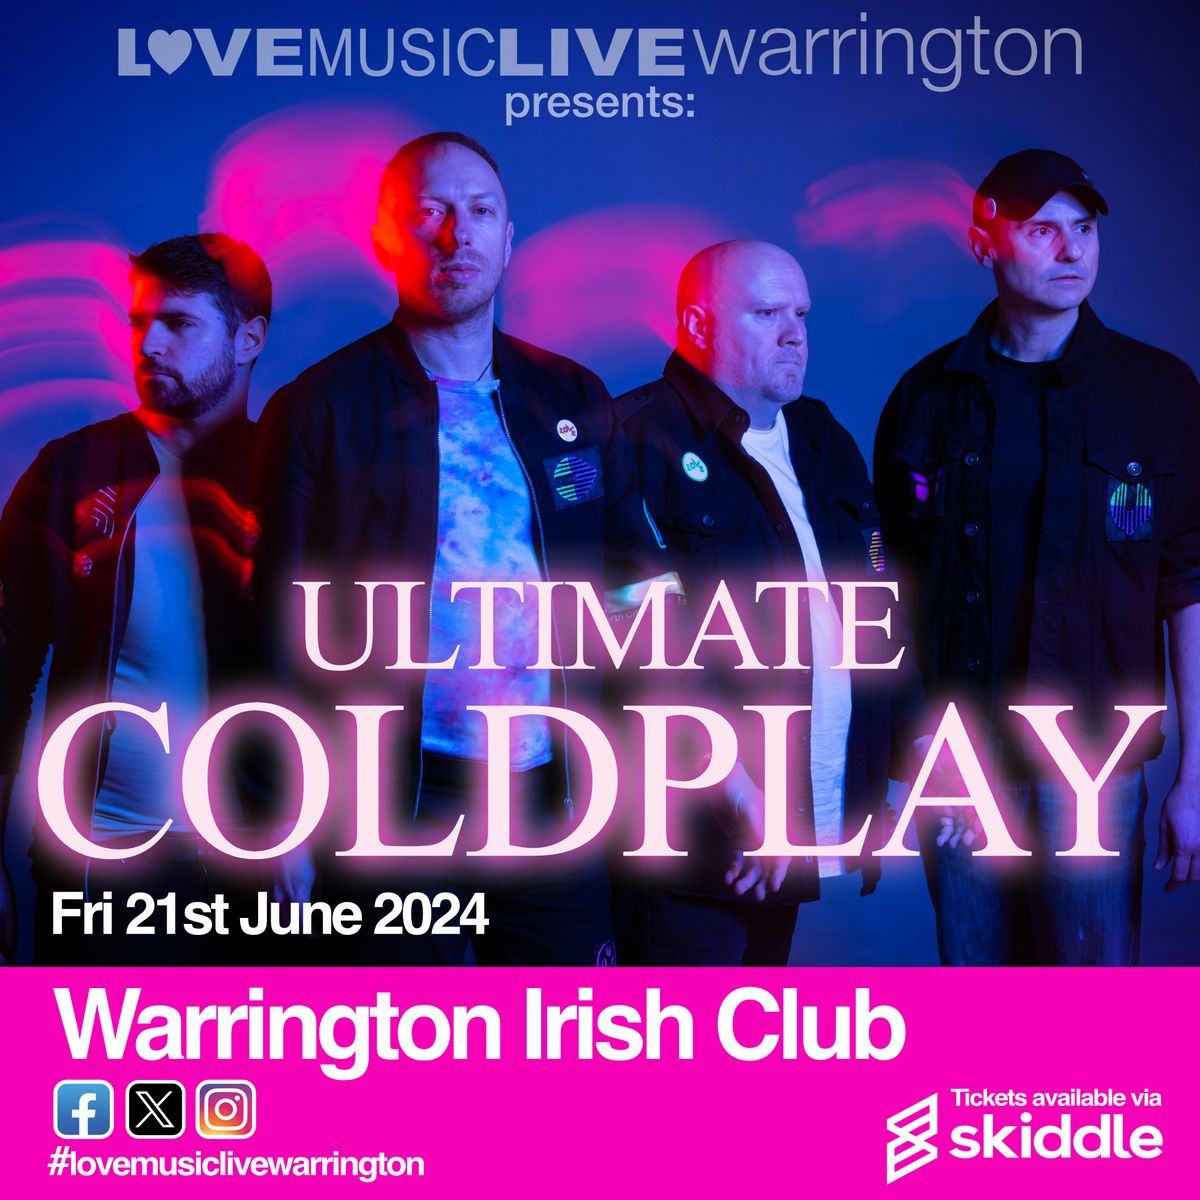 Ultimate Coldplay - 21st June 2024 - World touring, award winning tribute - Warrington Irish Club